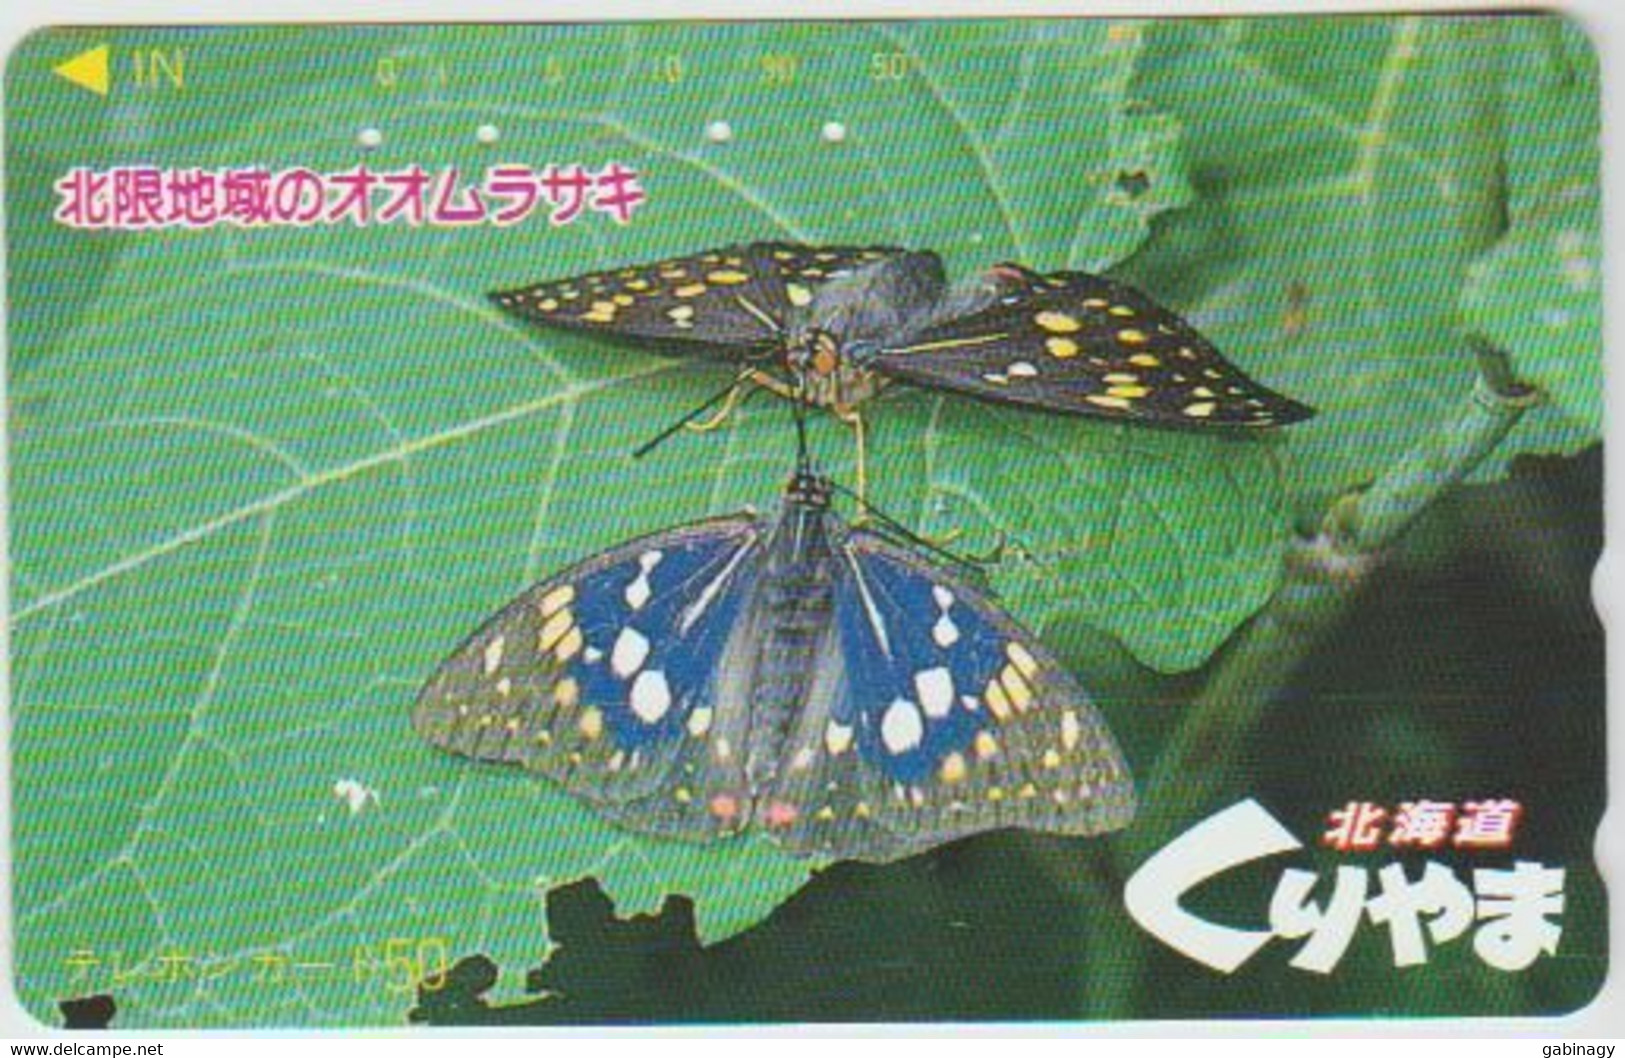 BUTTERFLY - JAPAN - H145 - 430-3849 - Mariposas